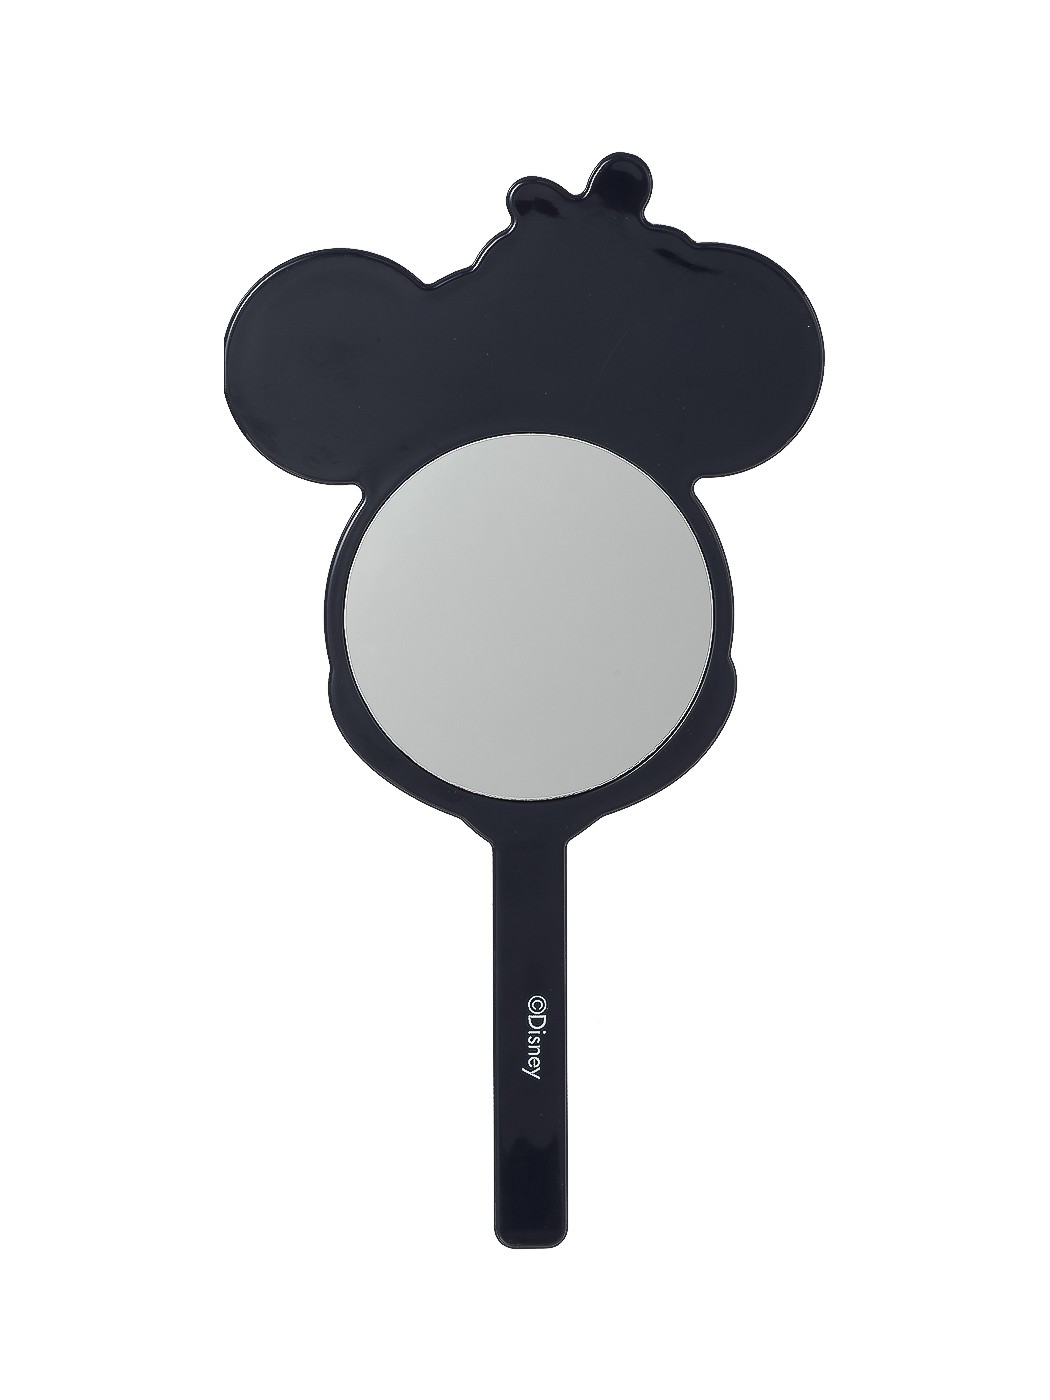 Mickey Mouse Lisanslı El Aynası - Minnie